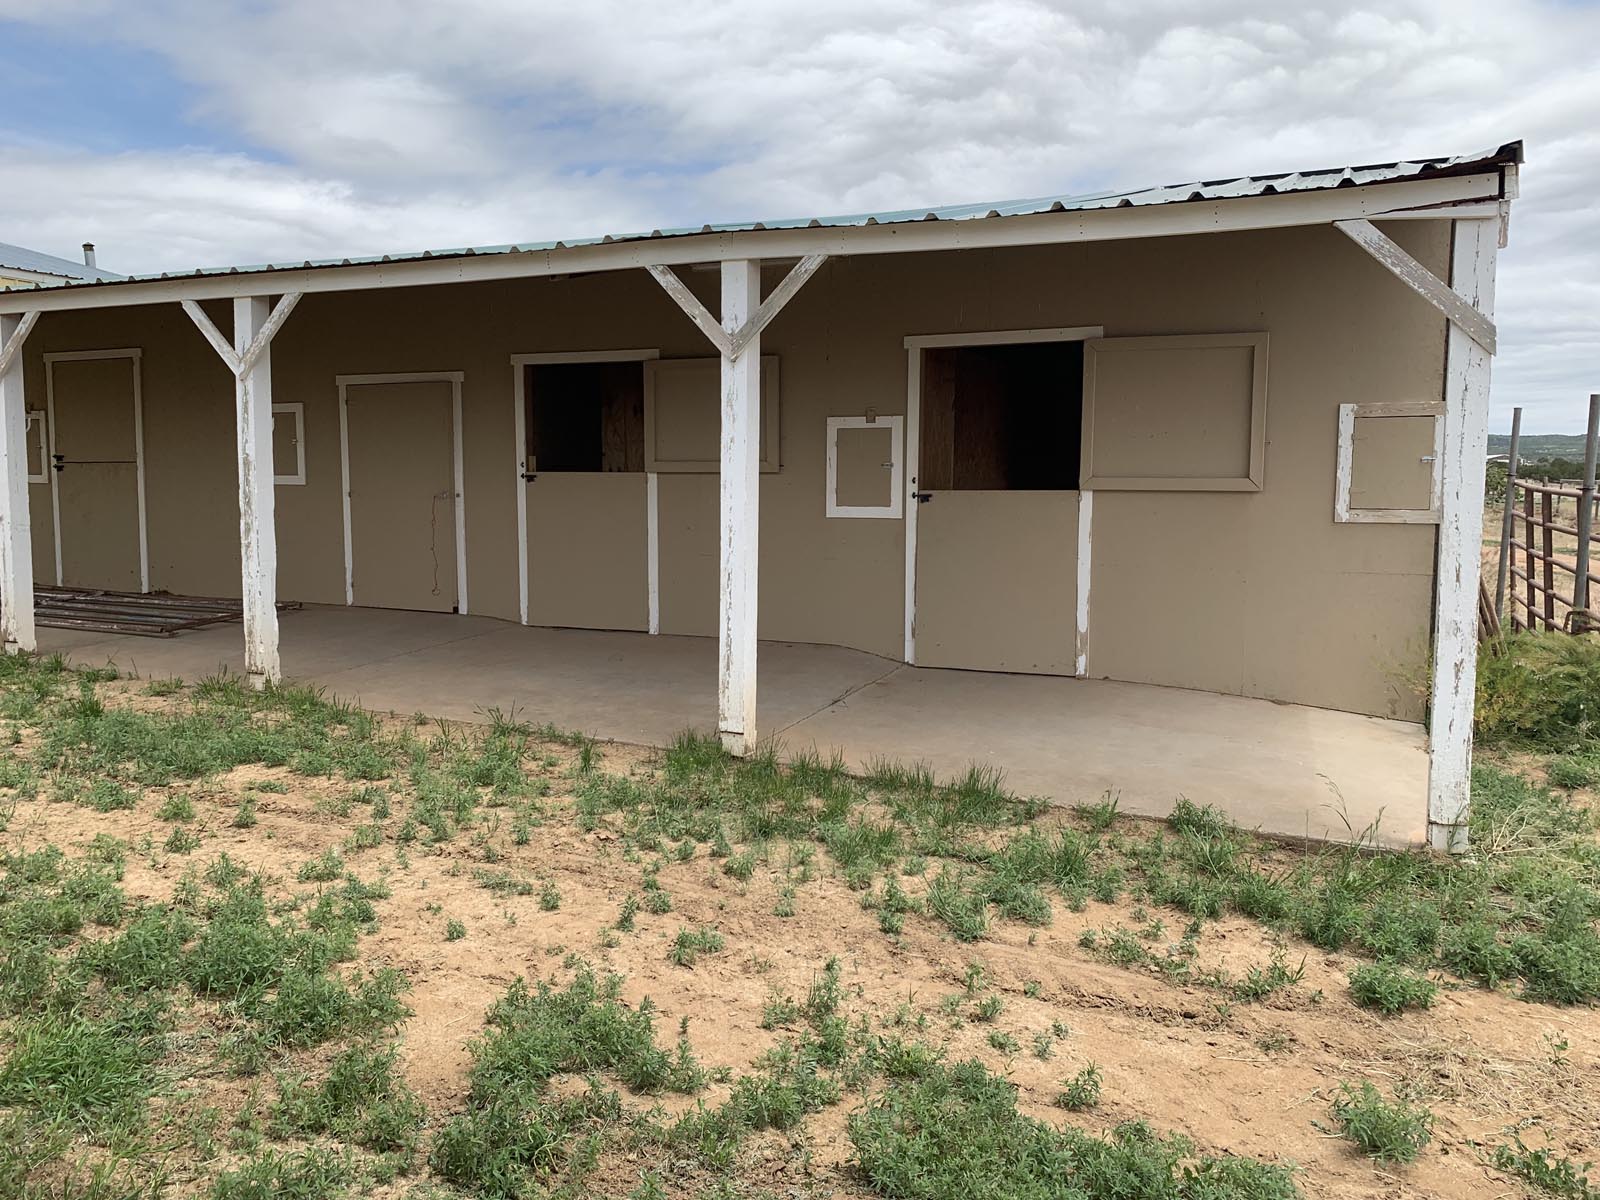 Shedrow Barn at Tiger Owl Ranch horse boarding facility in Santa Fe, New Mexico